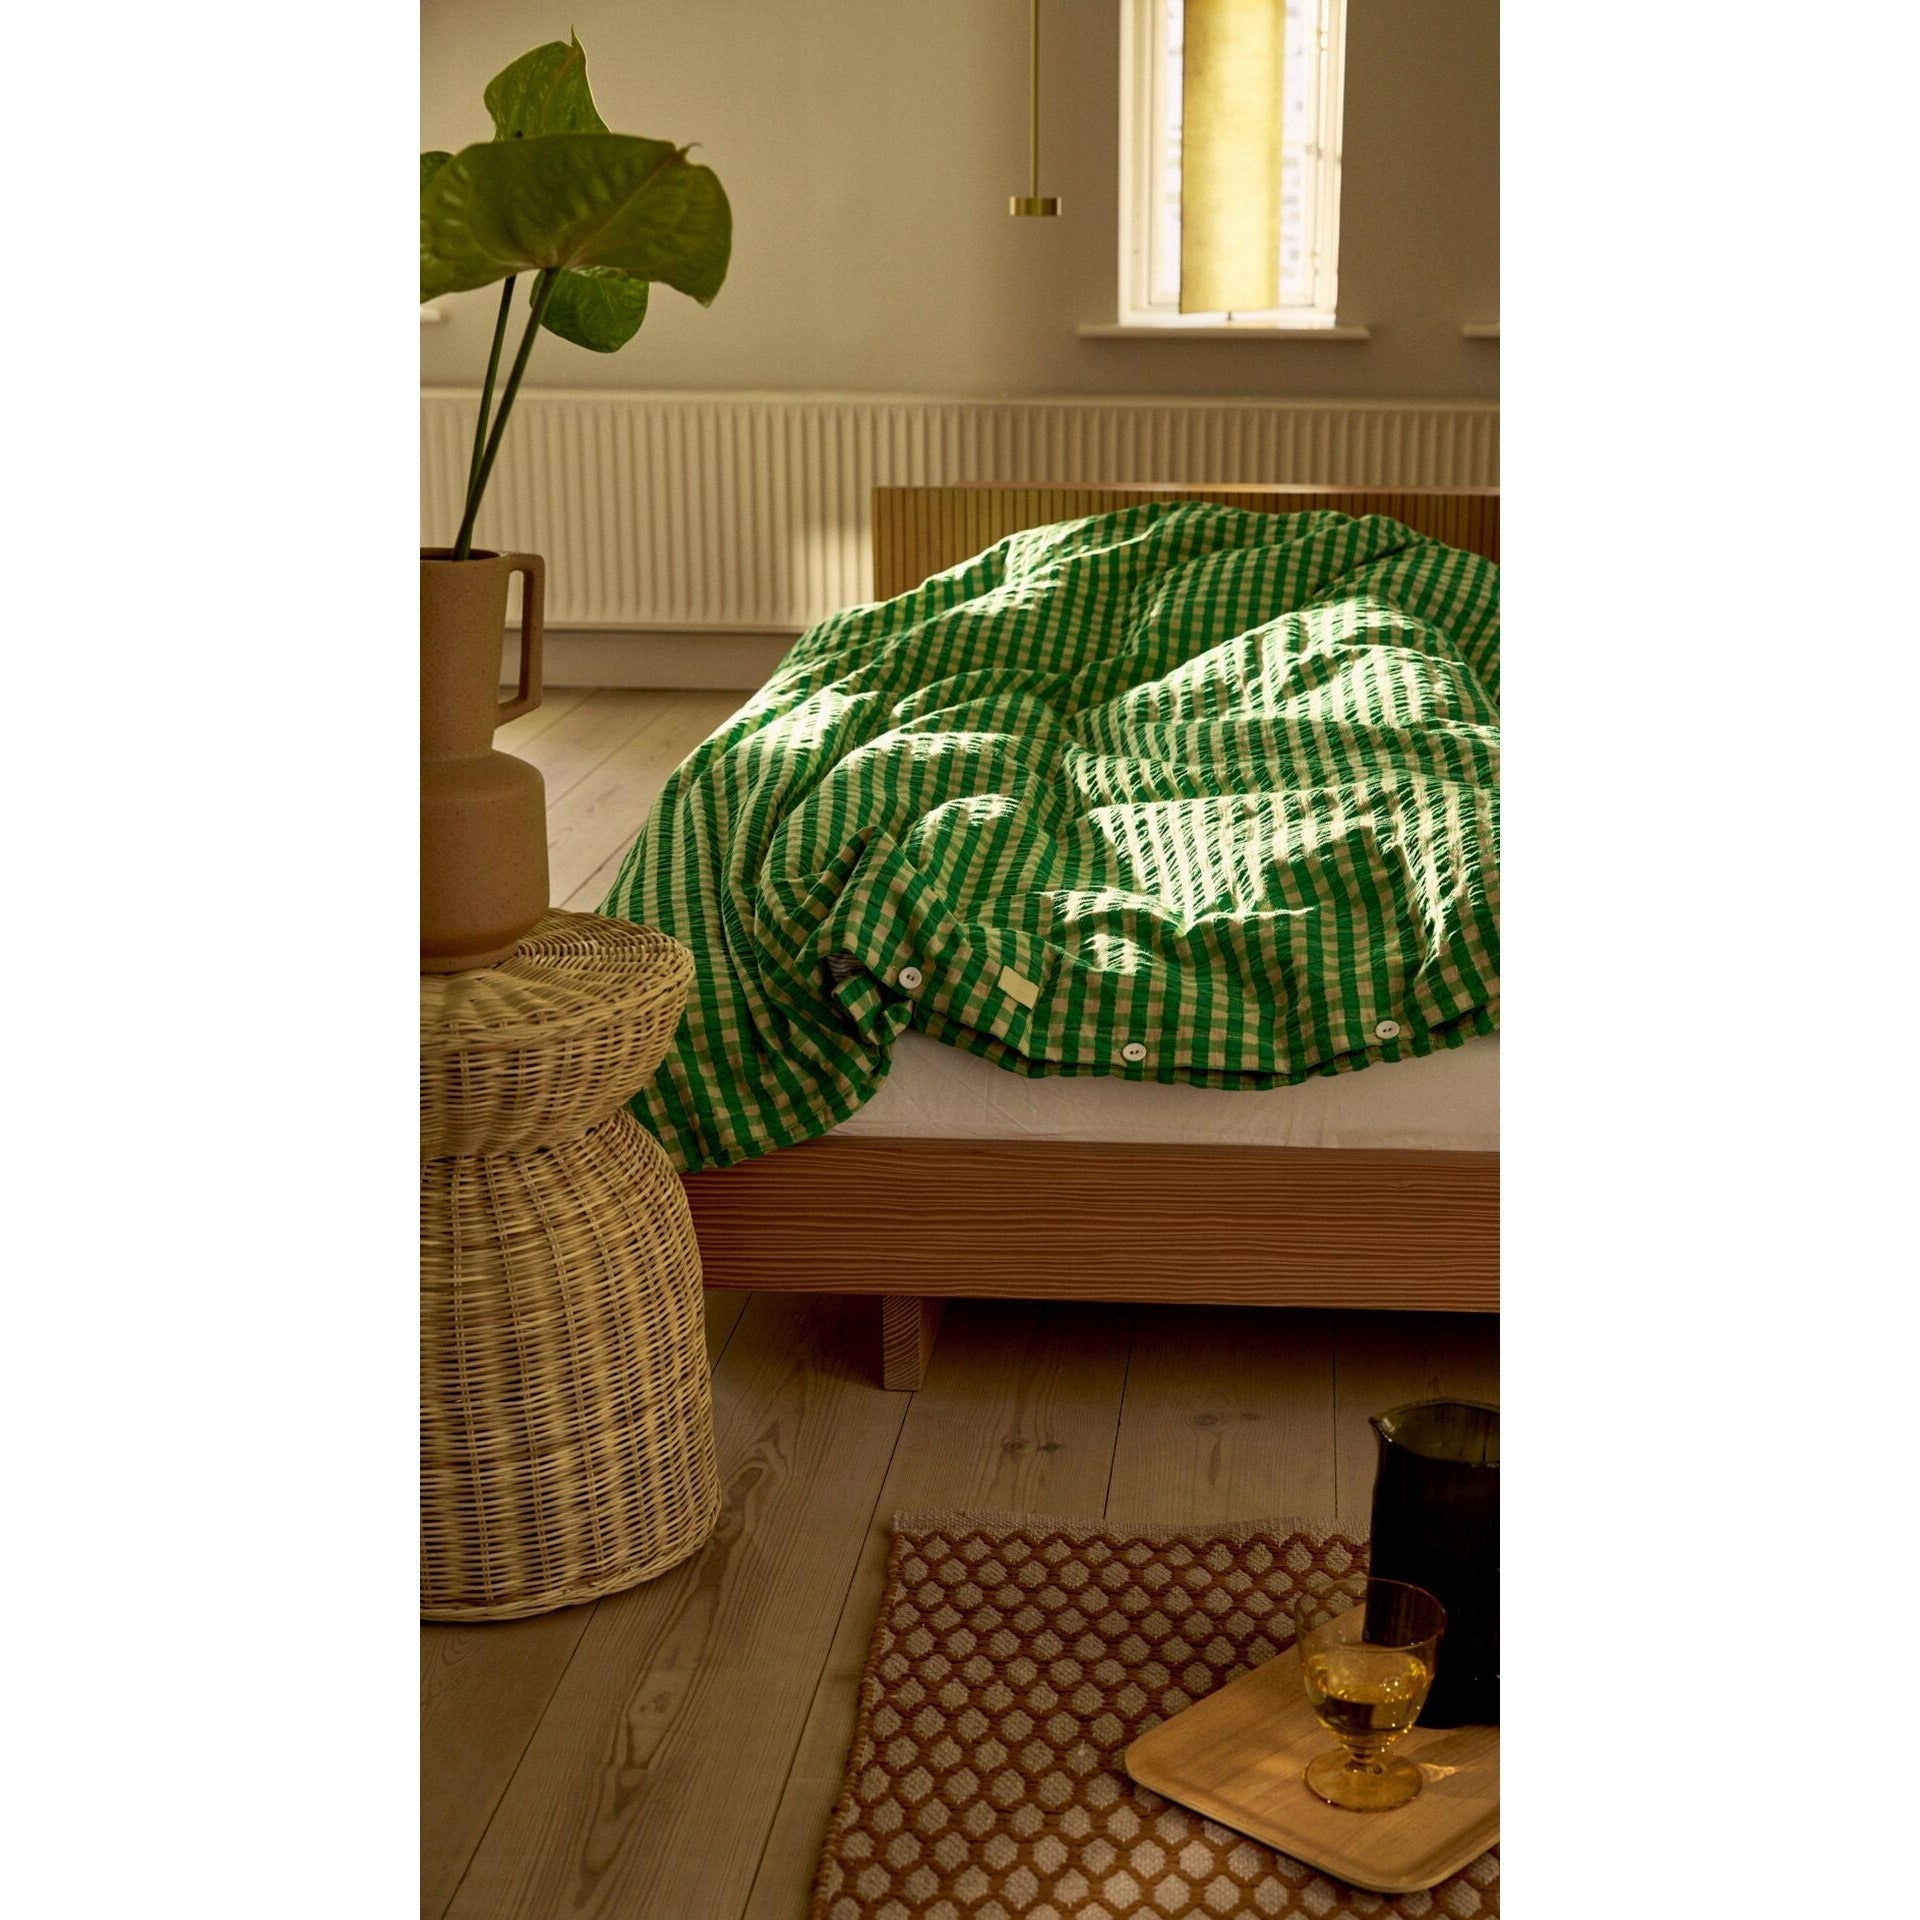 Juna Bæk & Bølge Bed Linen 140x220 cm, zelená/písek